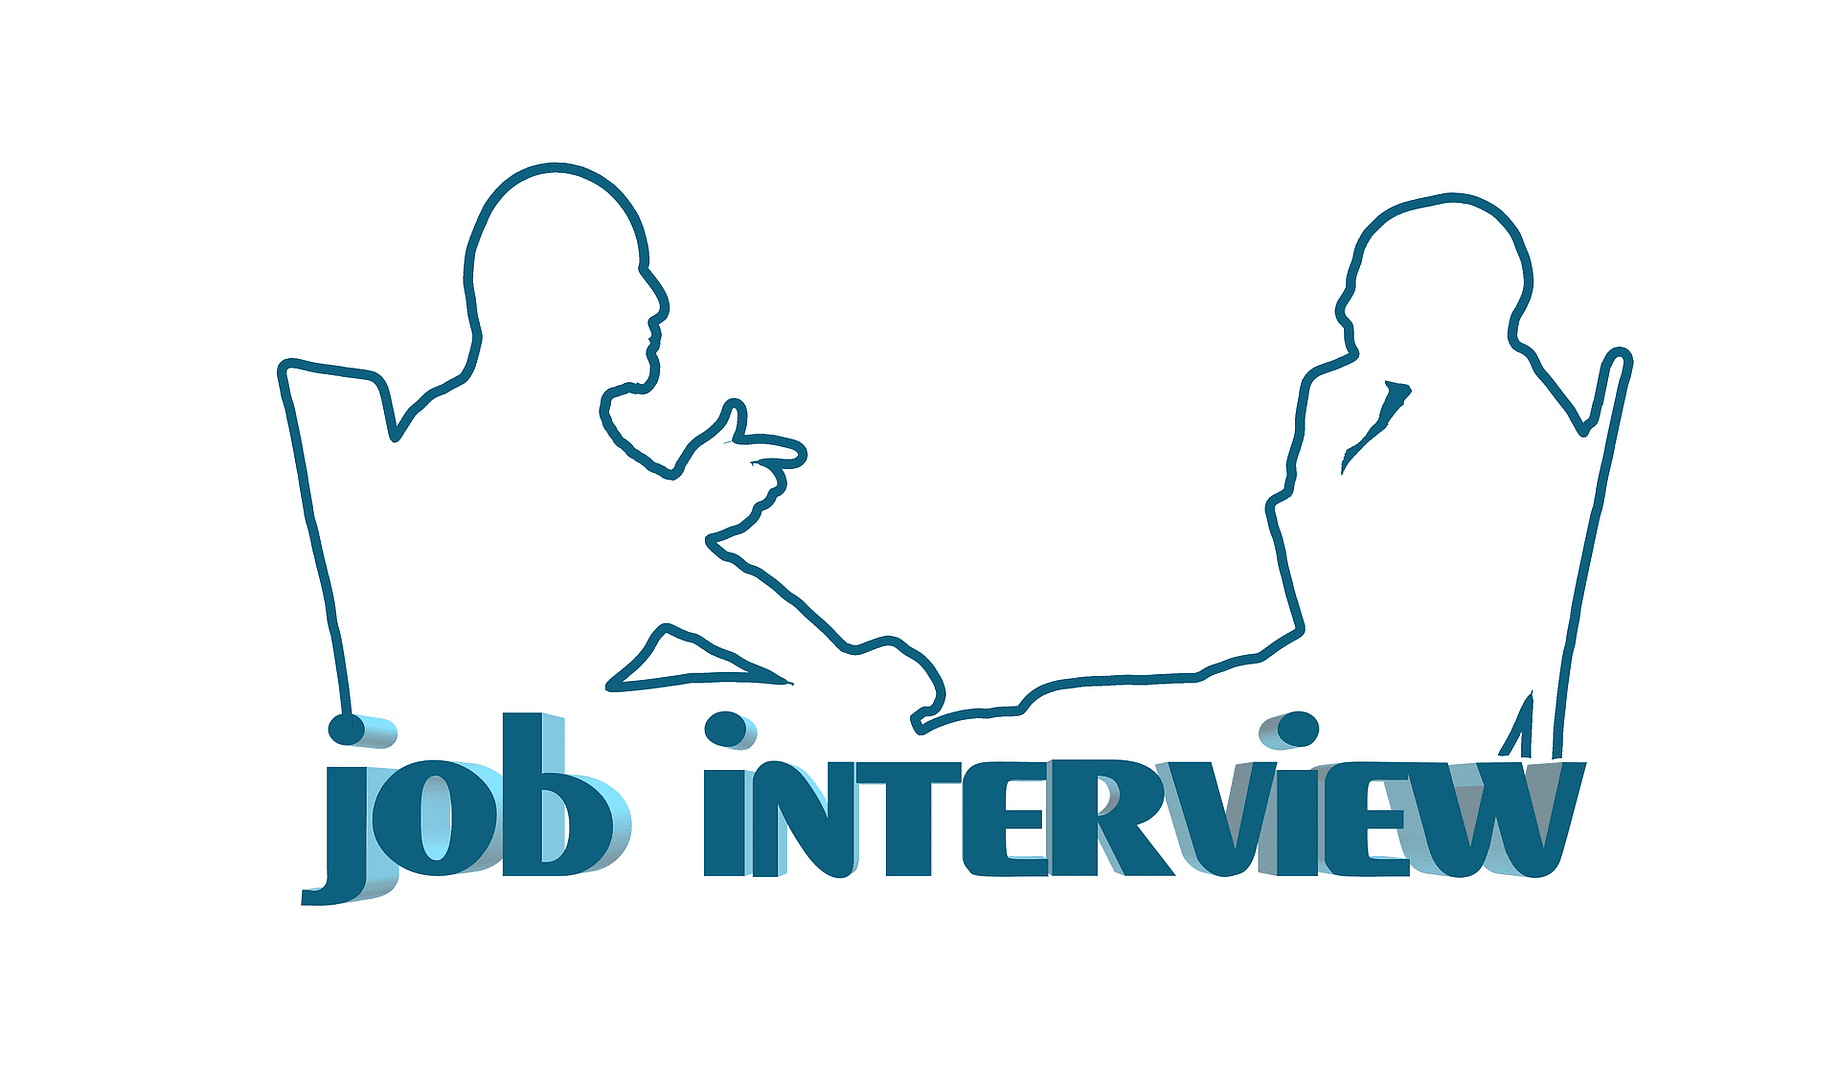 Job interview, preparing for interview